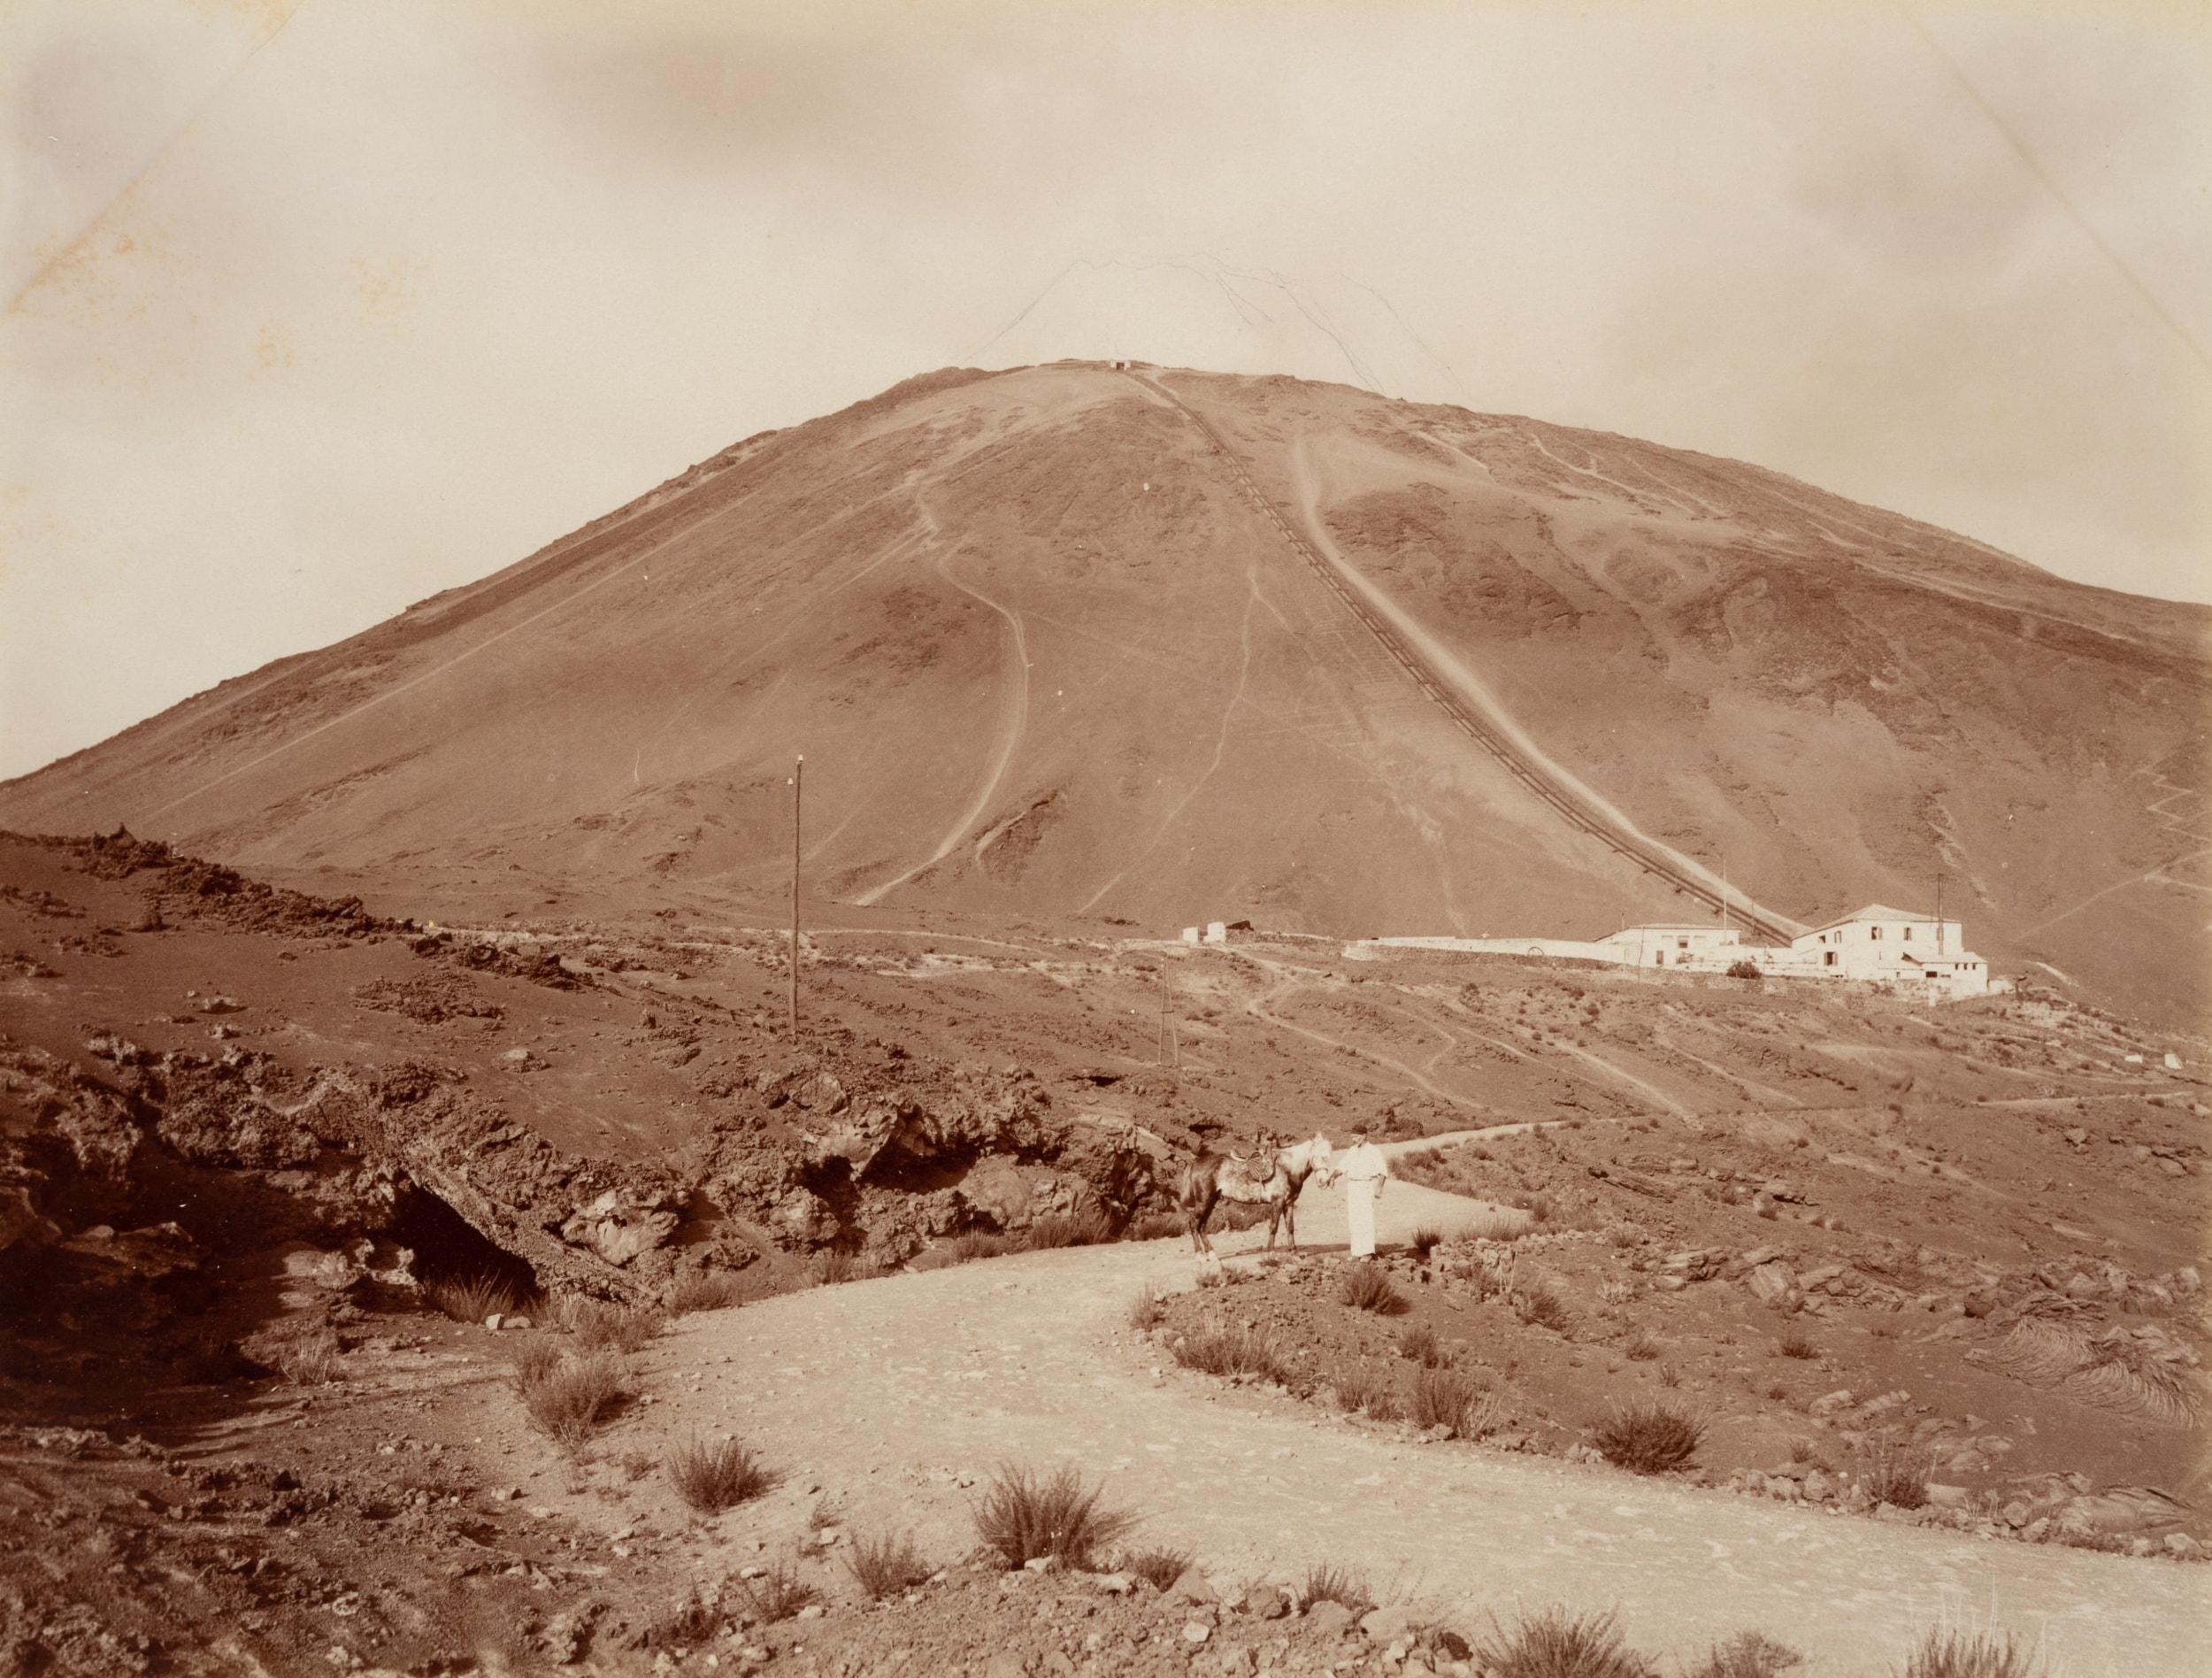 Fratelli Alinari Landscape Photograph - View of Vesuvius and the surrounding countryside